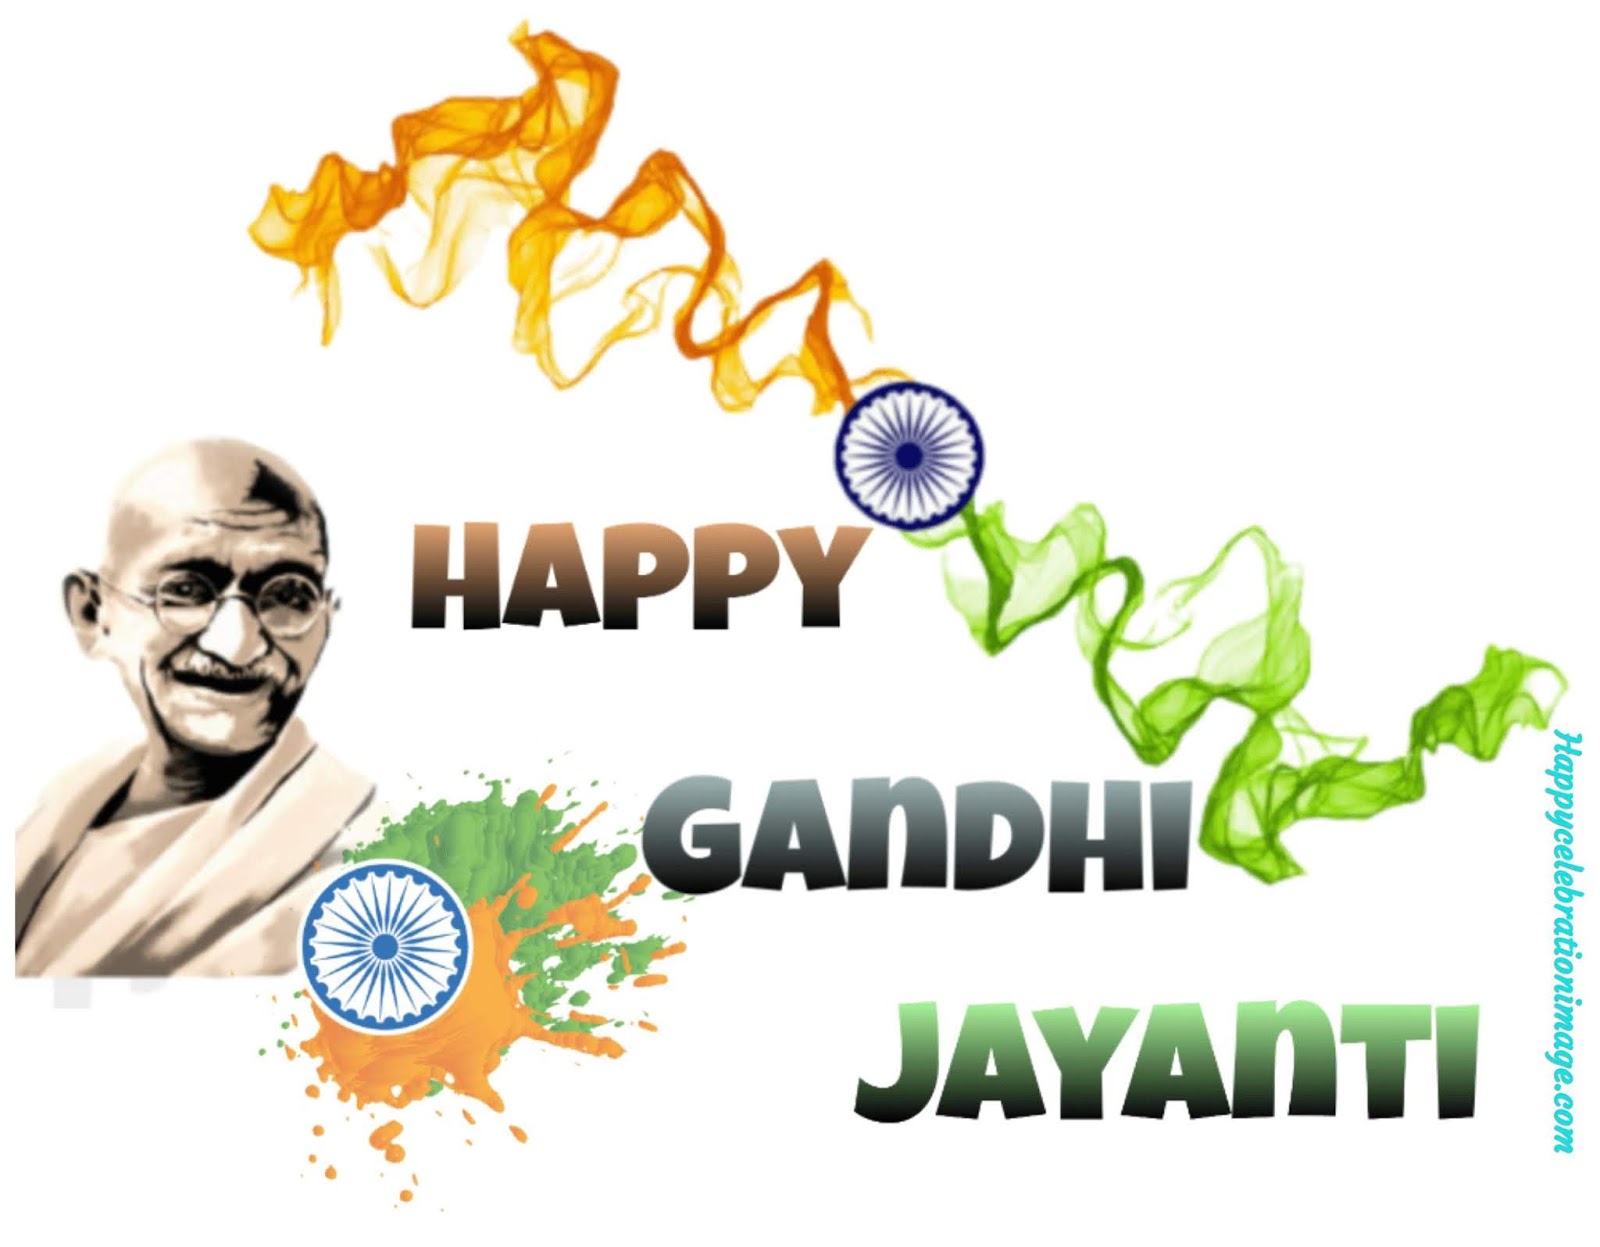 Happy Gandhi Jayanti - Indian Independence Day 2017 - HD Wallpaper 